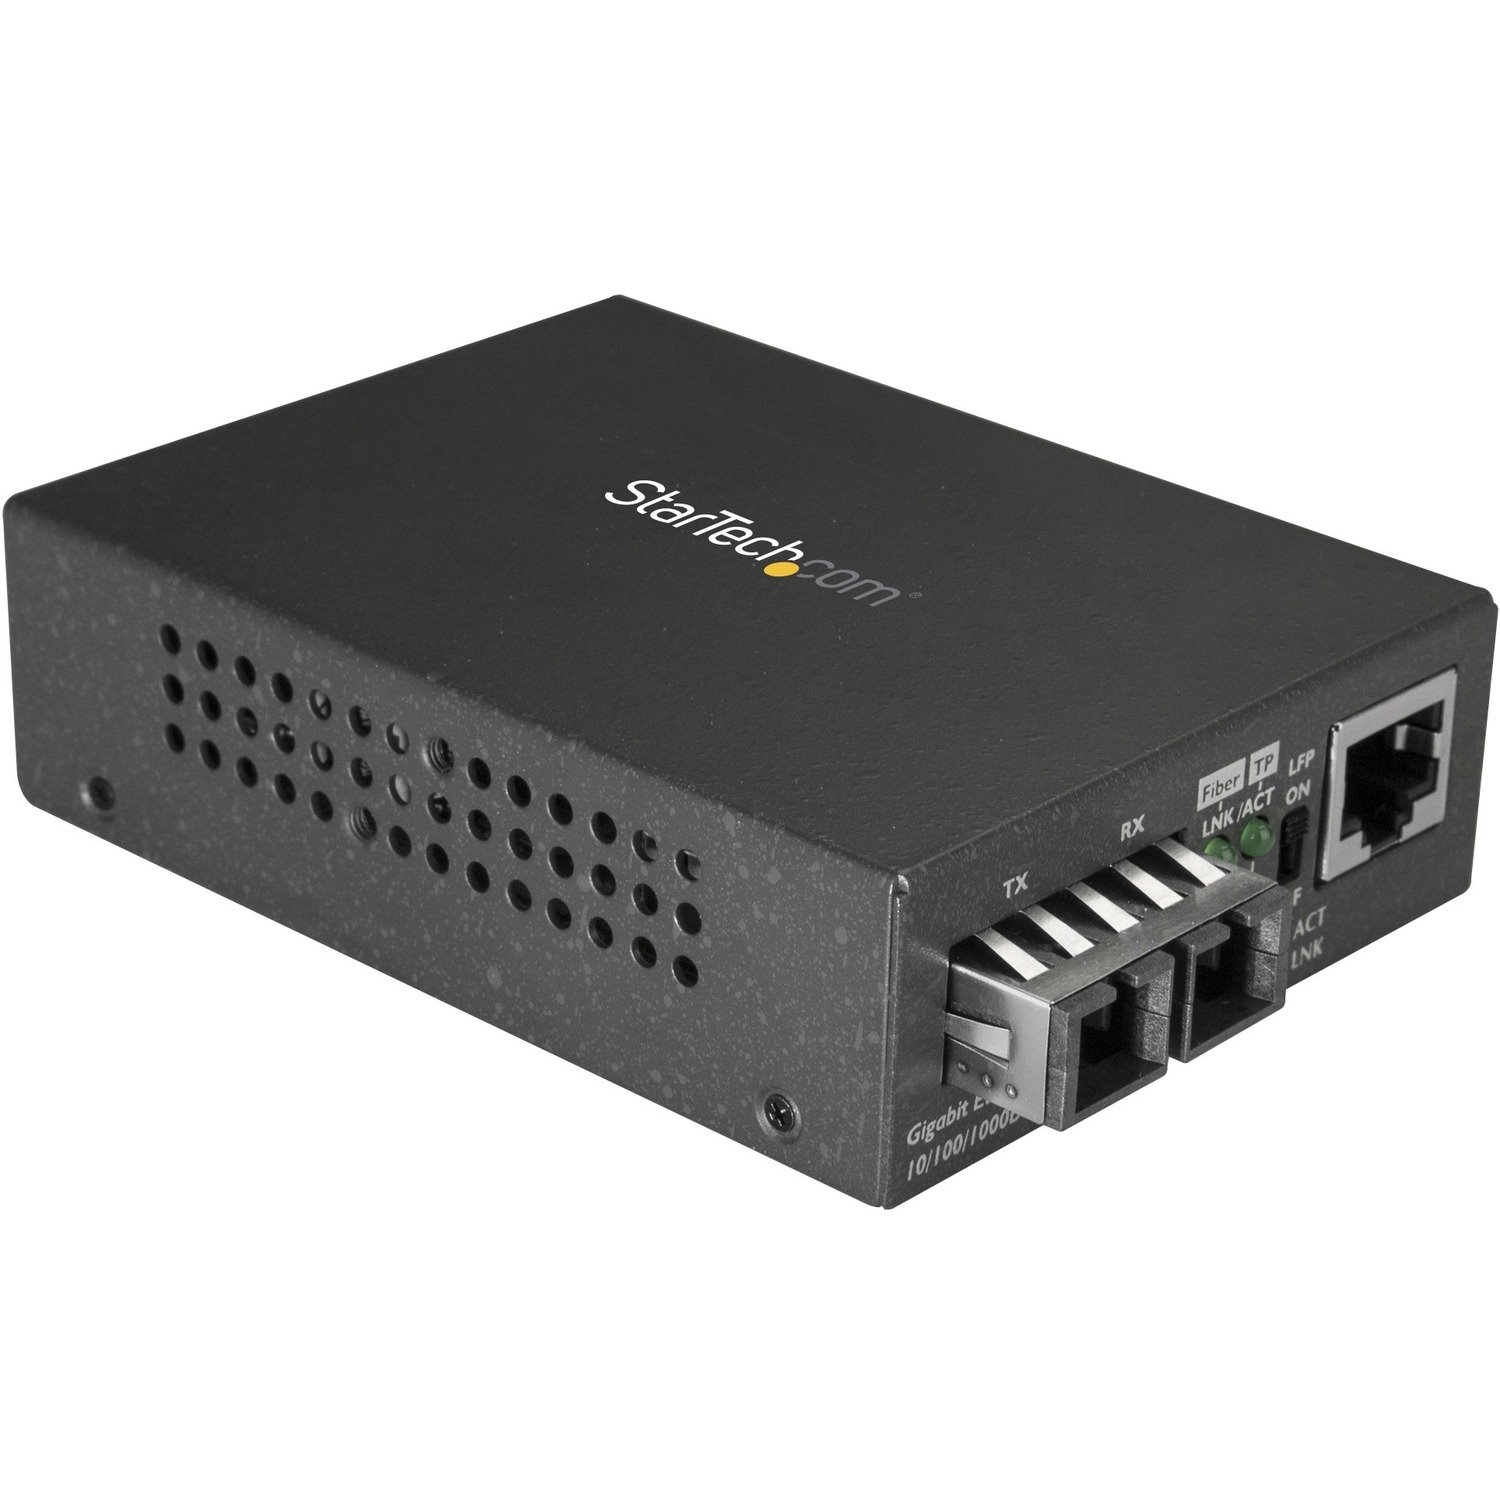 StarTech.com Multimode SC Fiber Ethernet Media Converter - 1000BASE-SX Gigabit Fiber Optic to Copper Bridge - 10/100/1000 Network - 550m